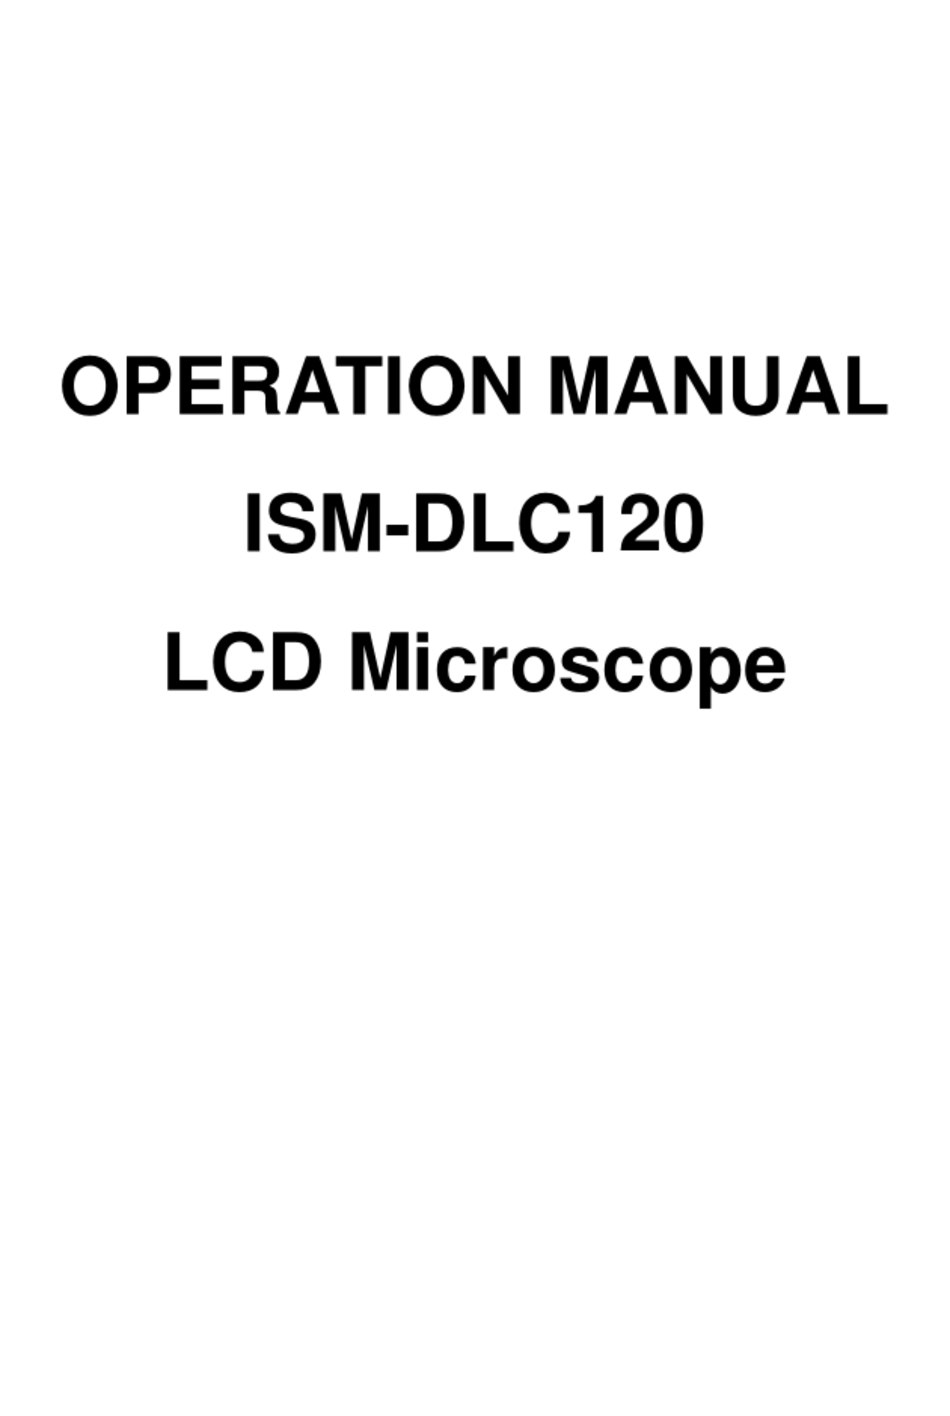 INSIZE ISM-DLC120 OPERATION MANUAL Pdf Download | ManualsLib